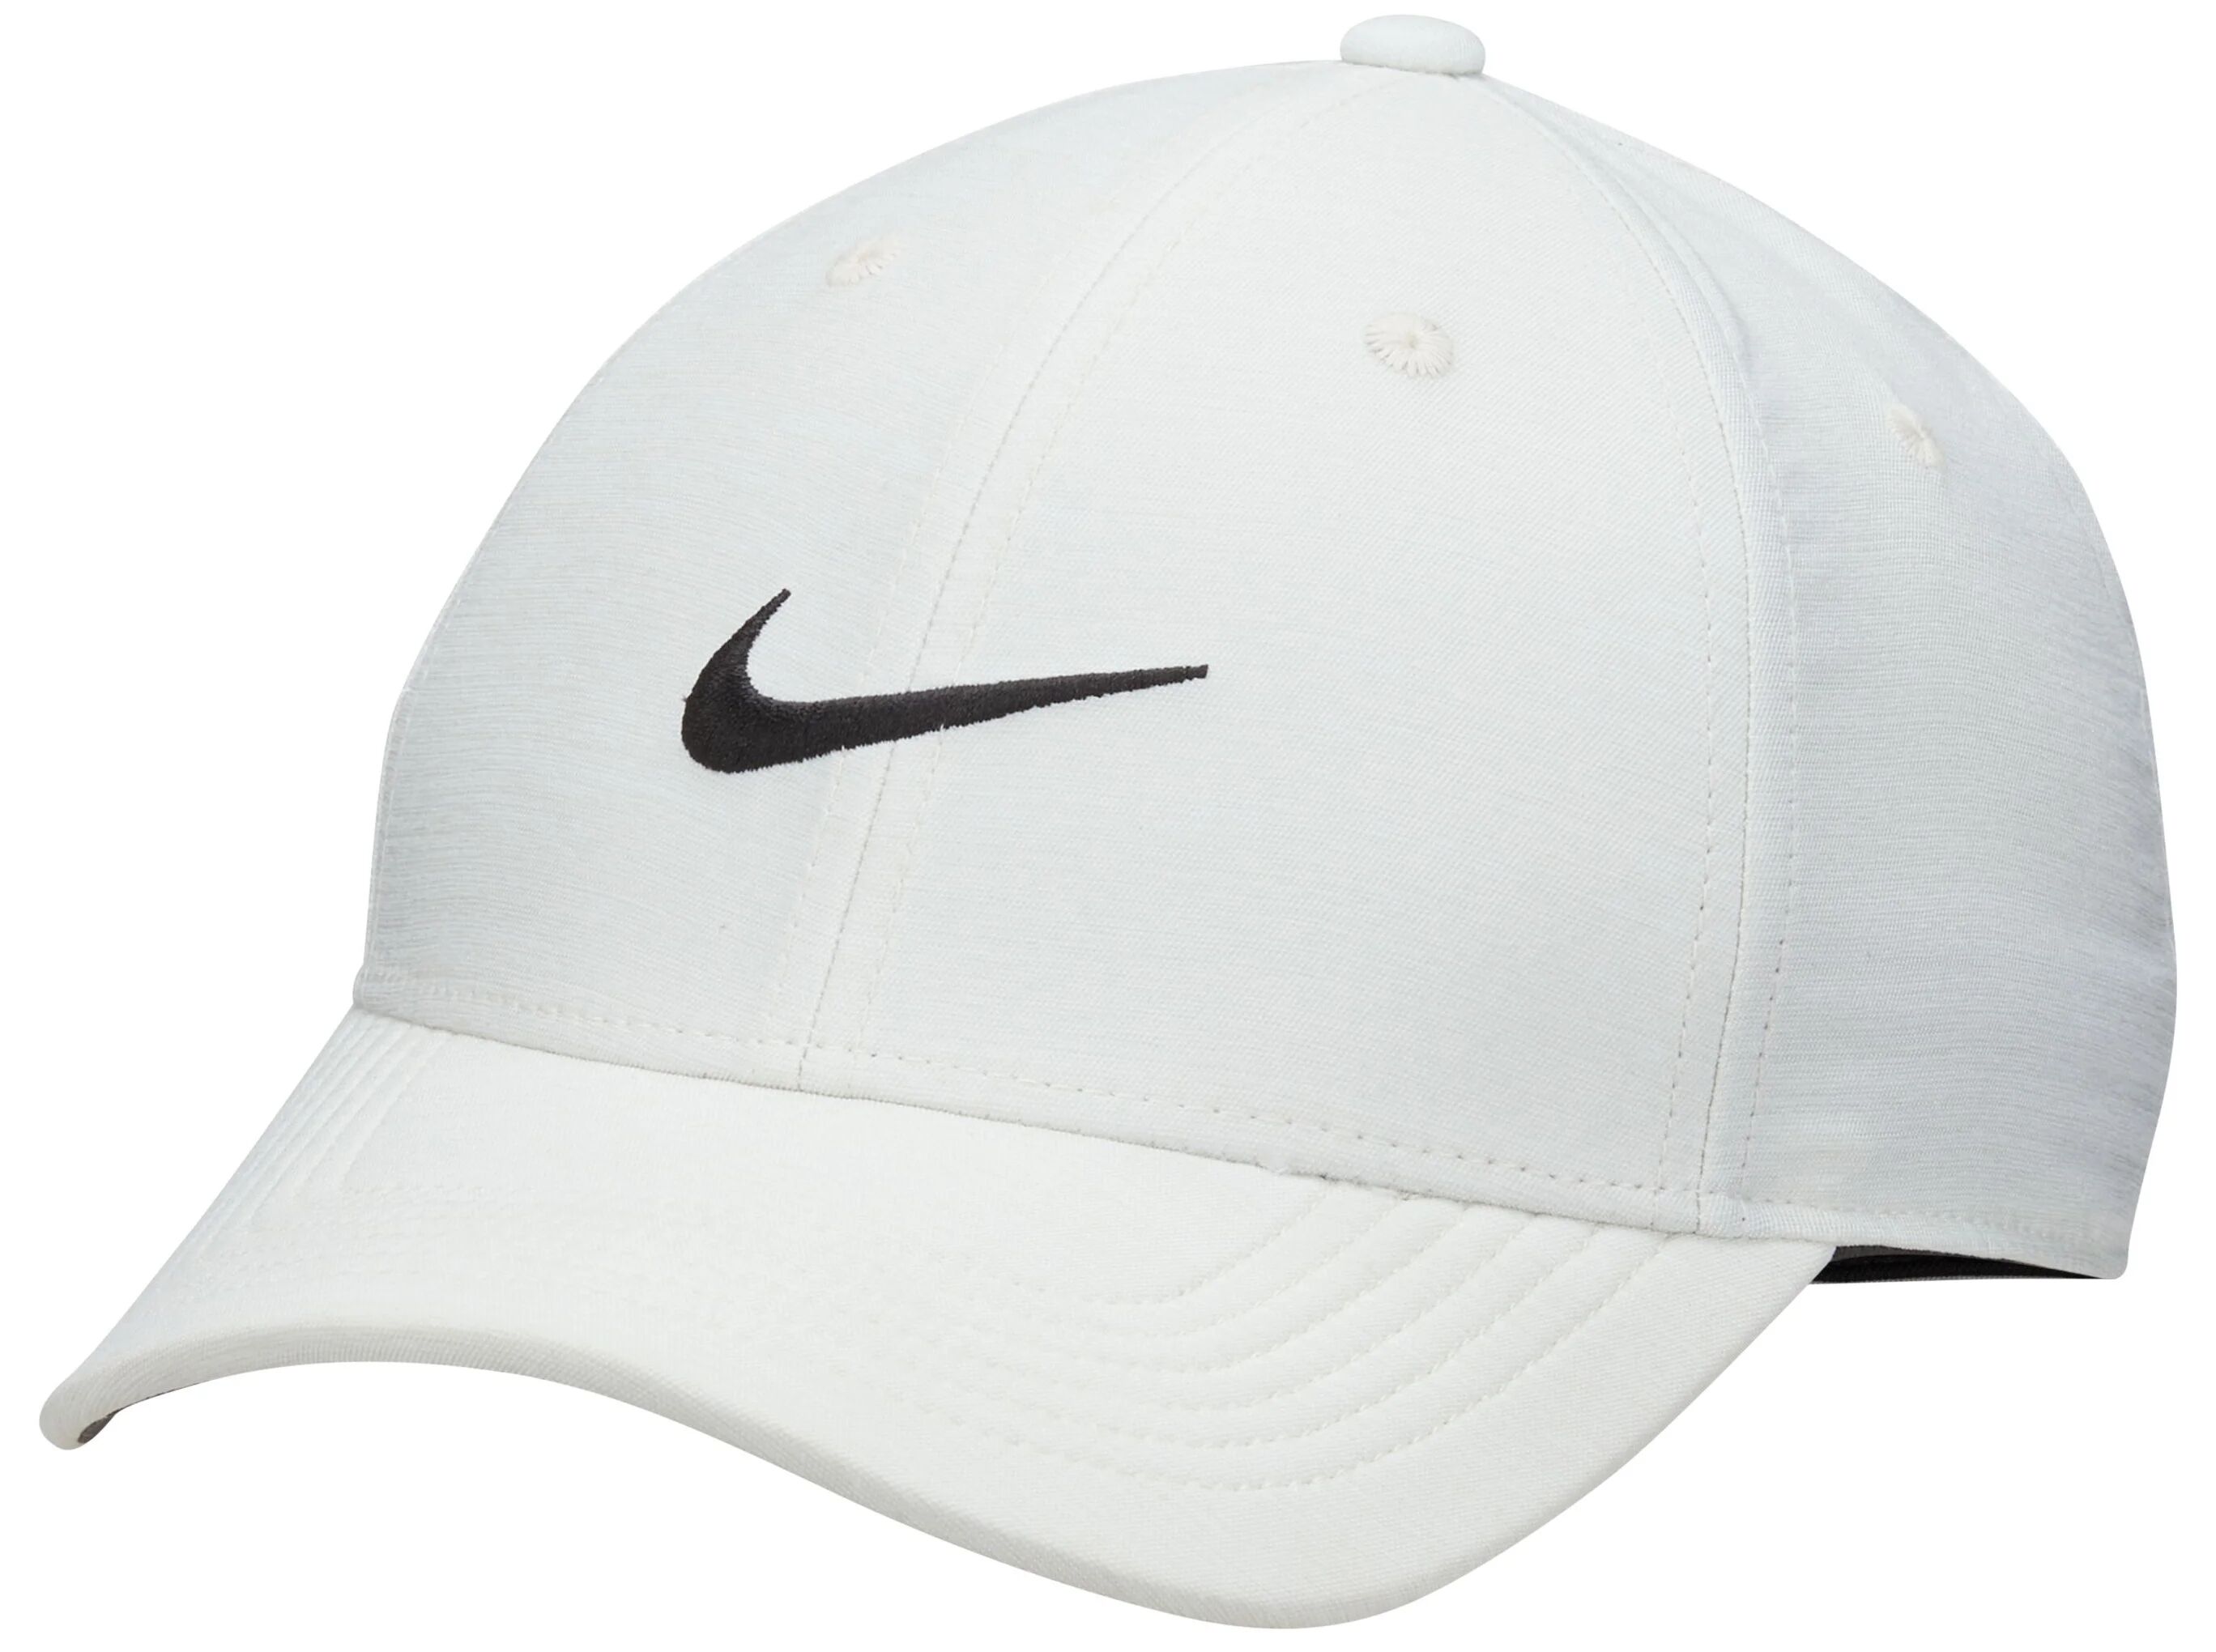 Nike Dri-FIT Club Structured Heathered Men's Golf Hat - White, Size: Small/Medium